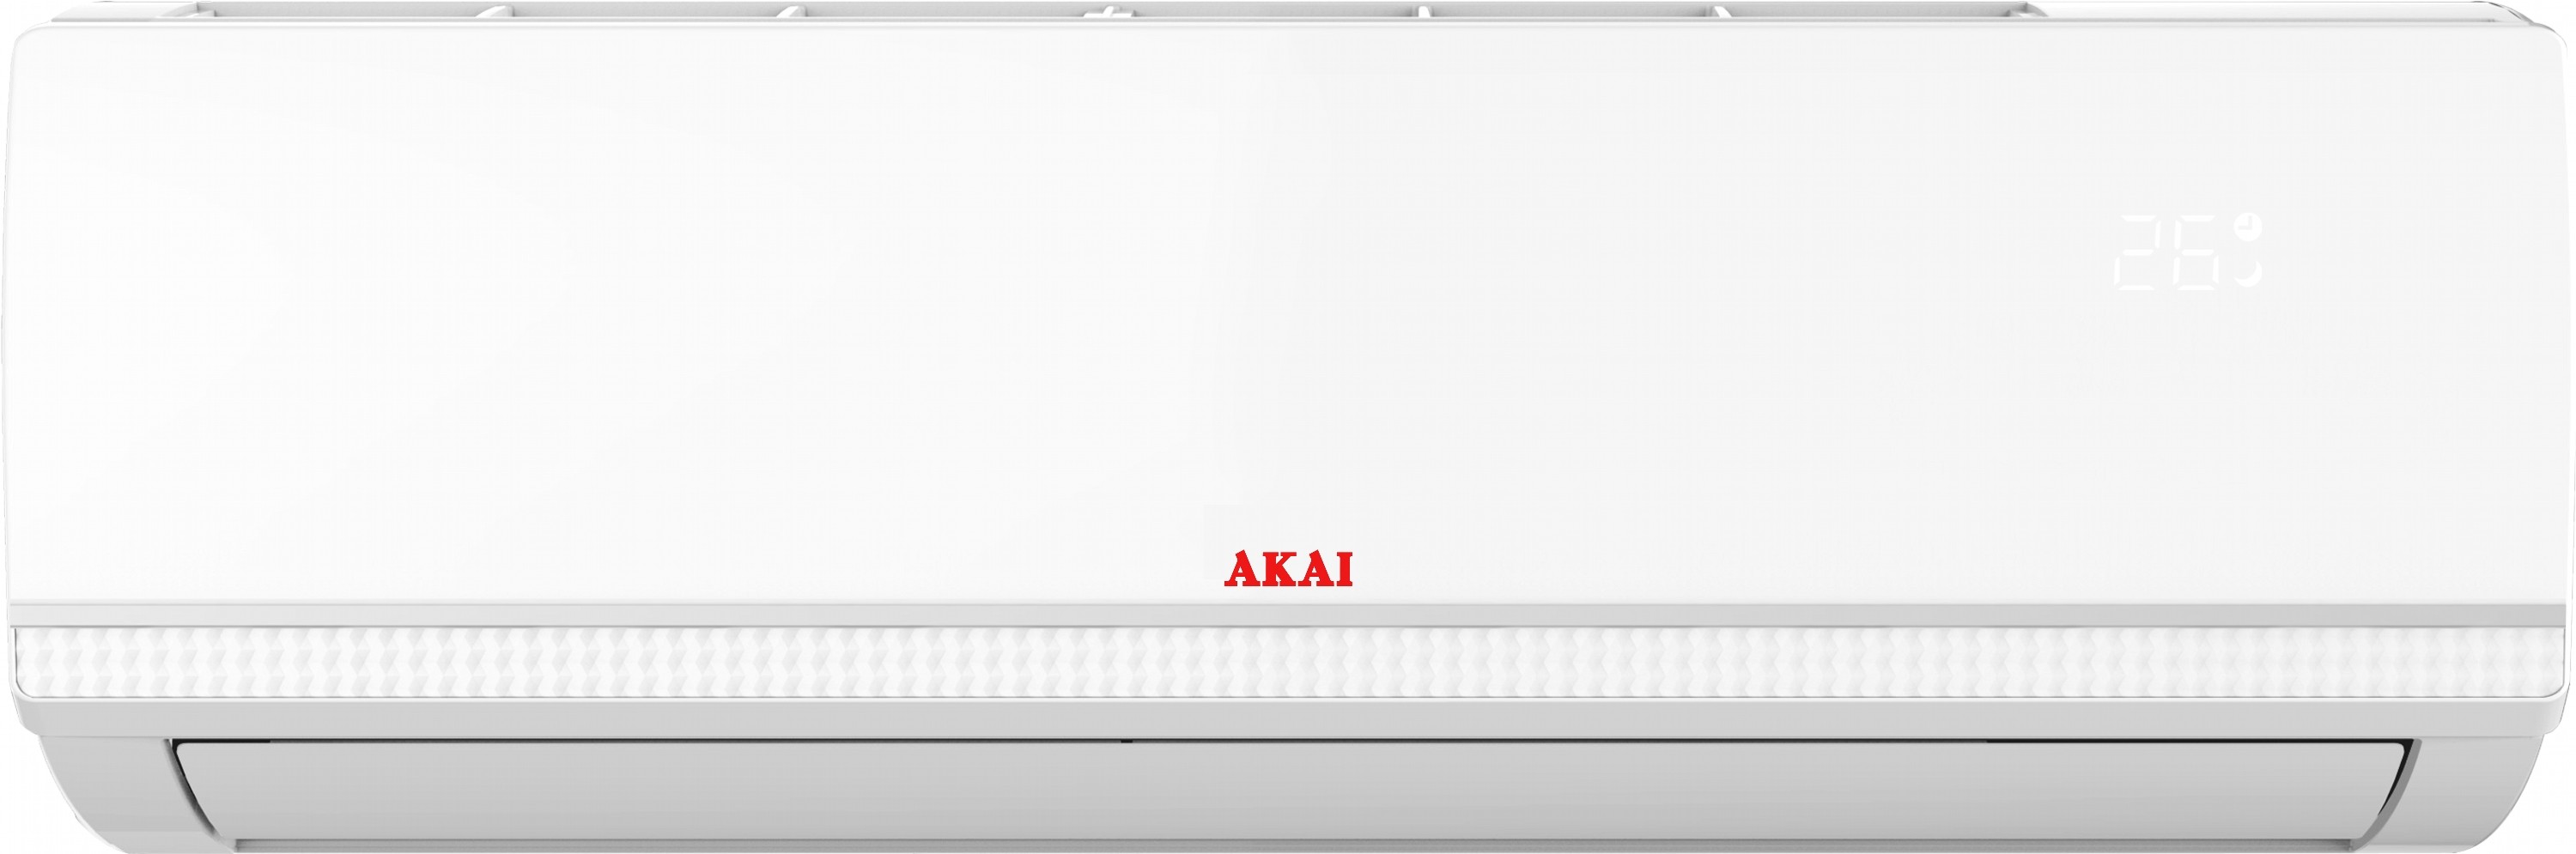 Кондиционер сплит-система Akai AK-AC9010-OF цена 10499.00 грн - фотография 2